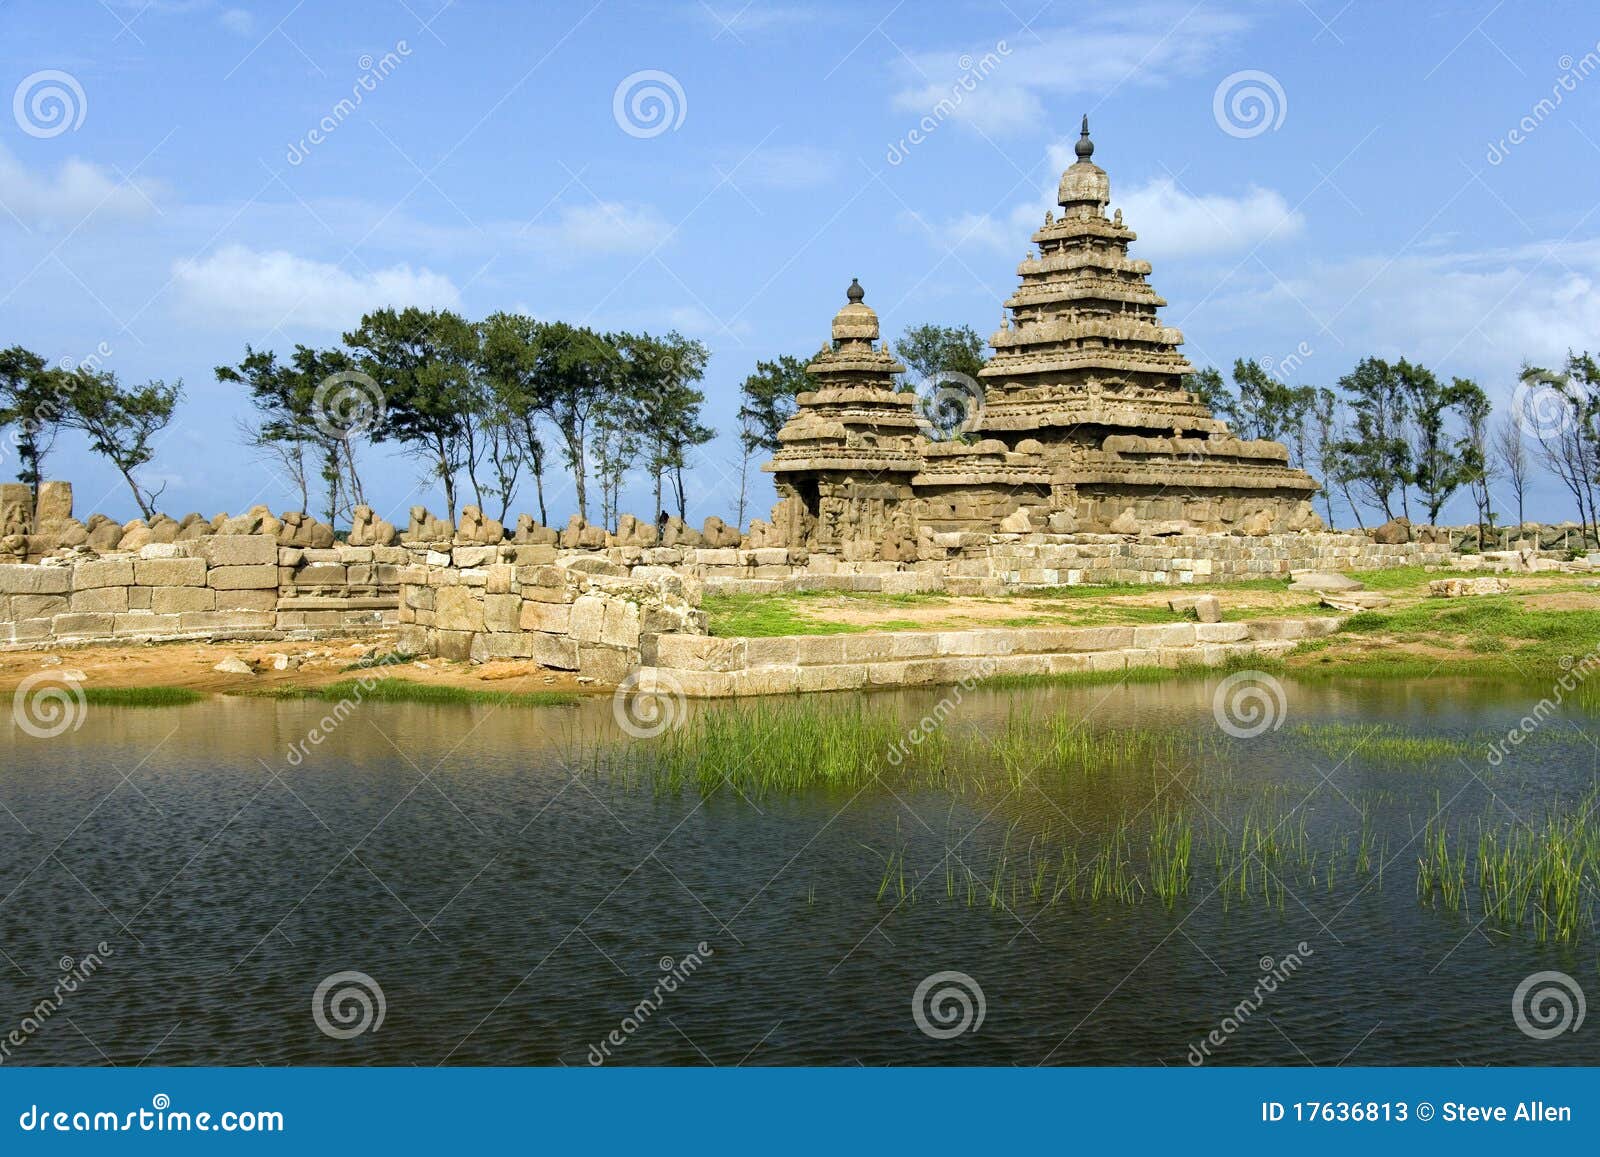 shore temple - mamallapuram - tamil nadu - india